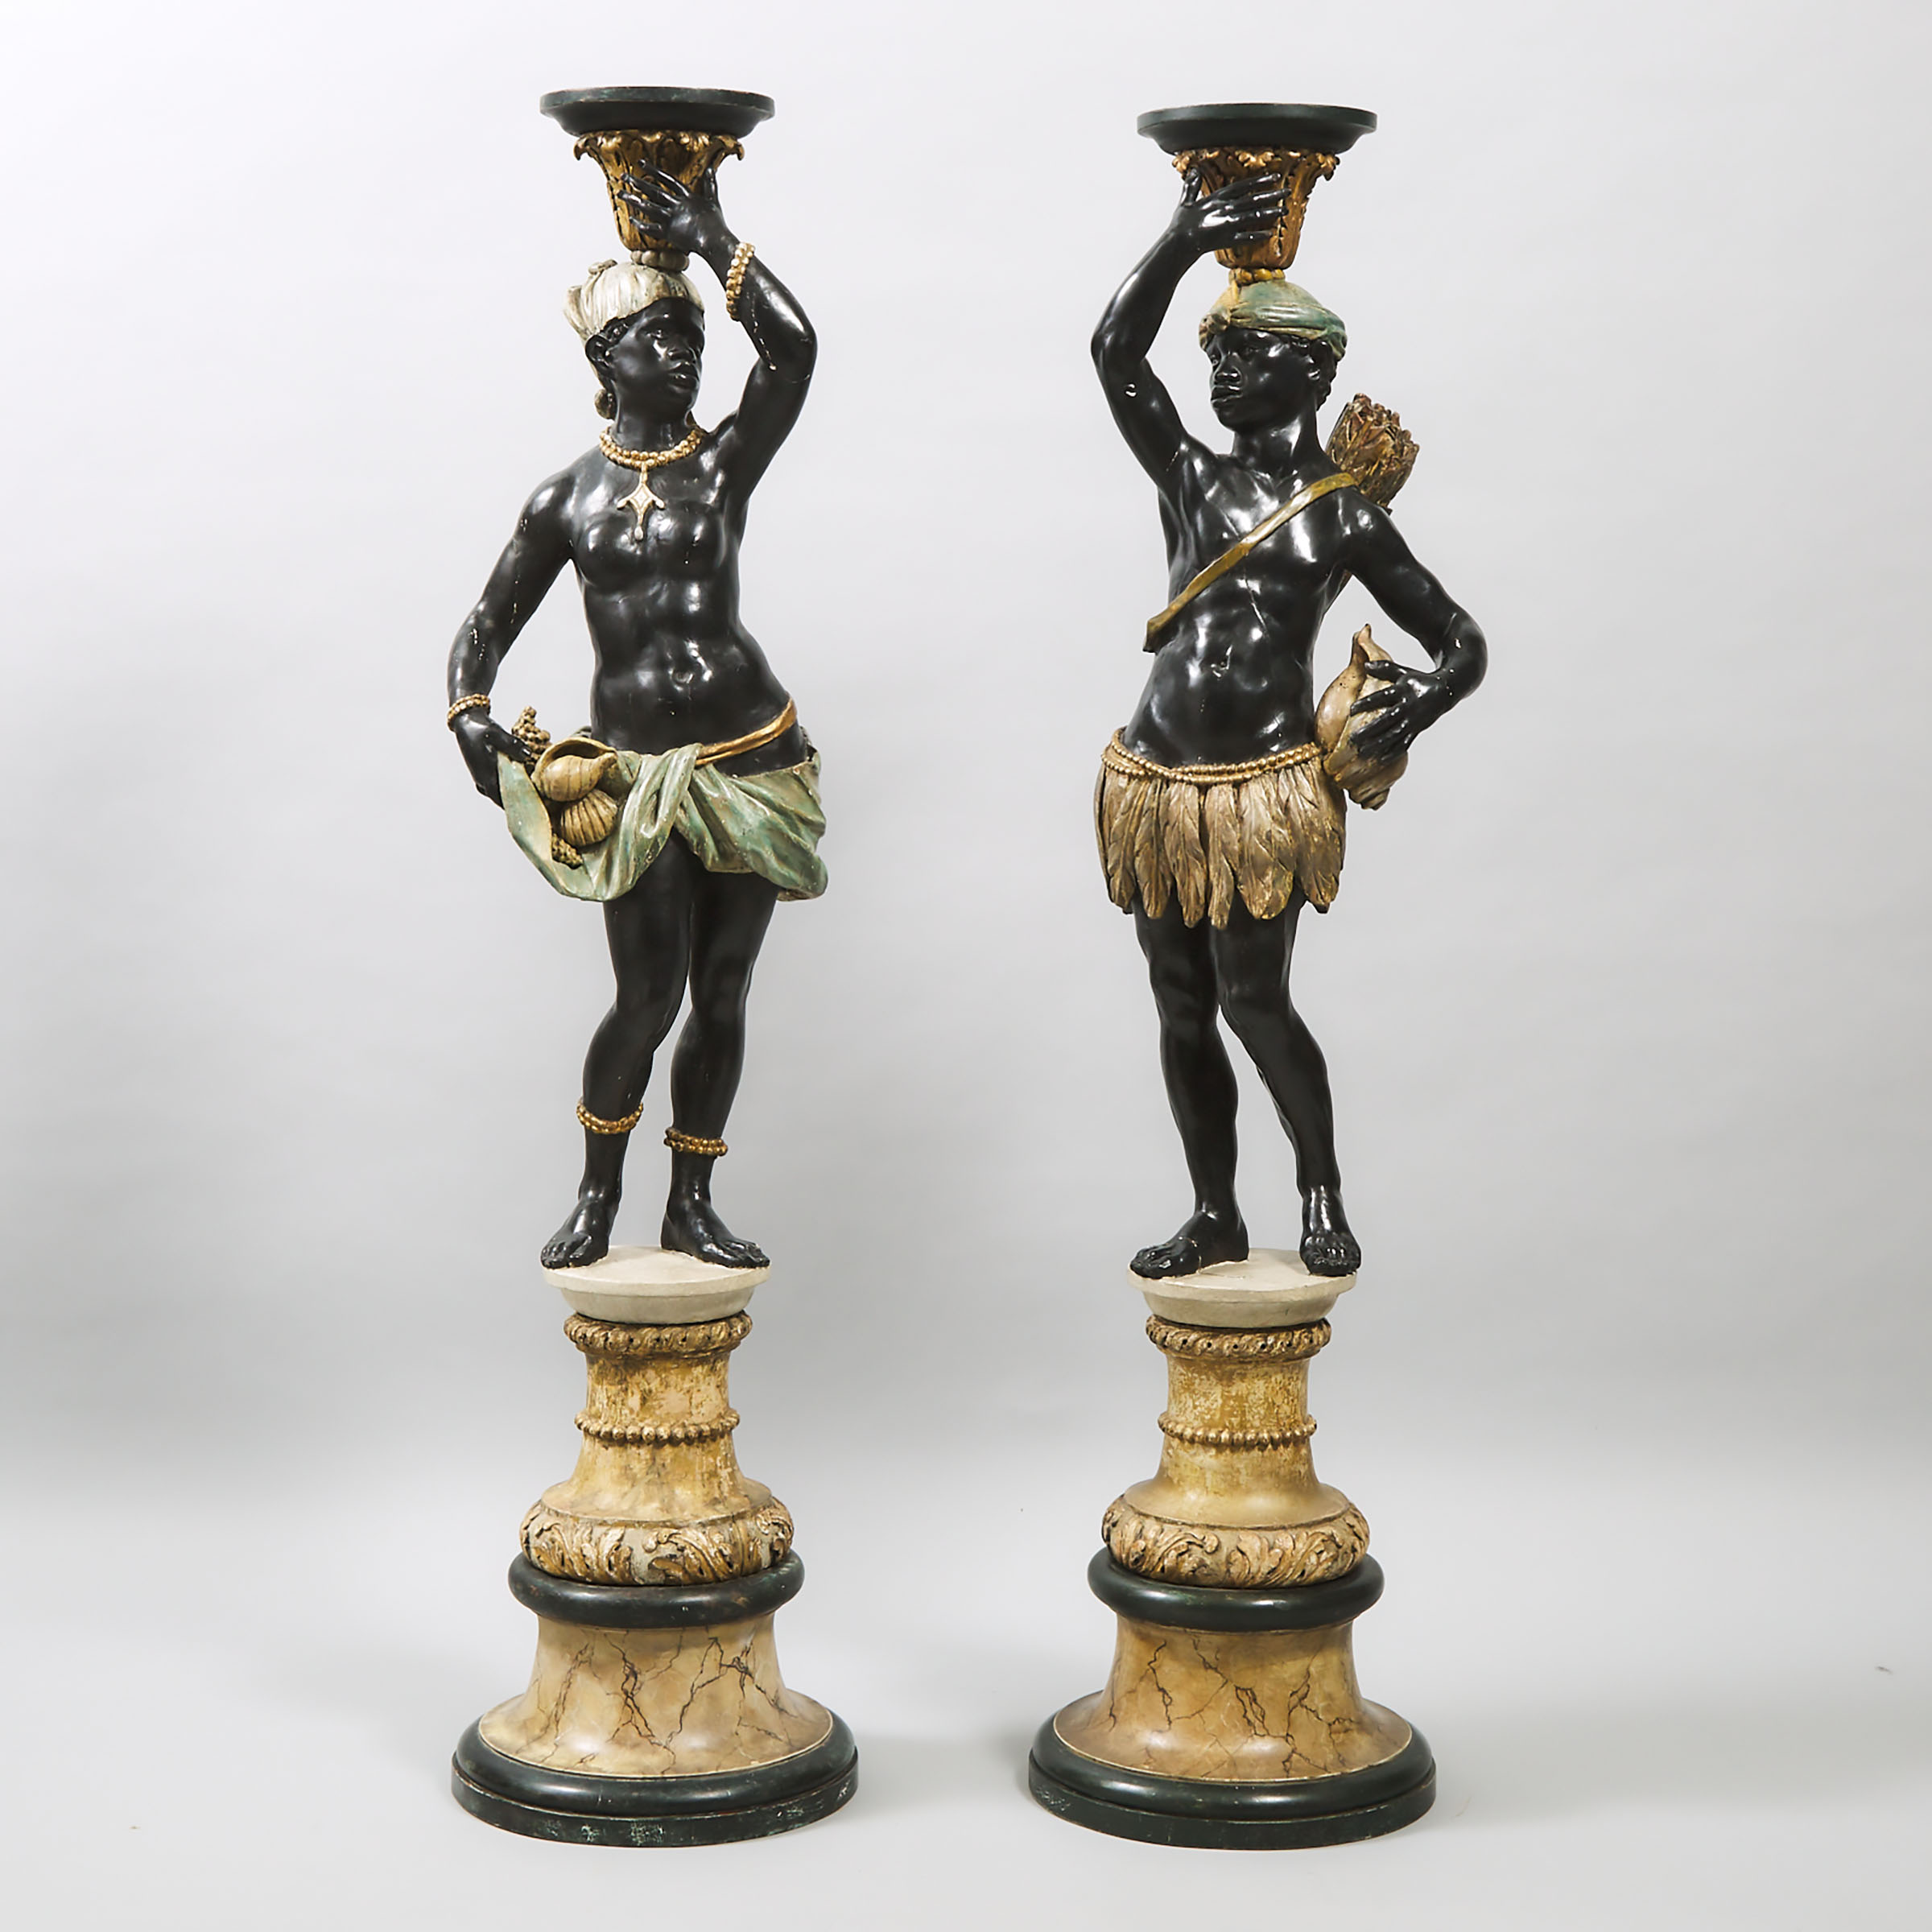 Pair of Venetian Blackamoor Figural Pedestals, Italy, mid 19th century